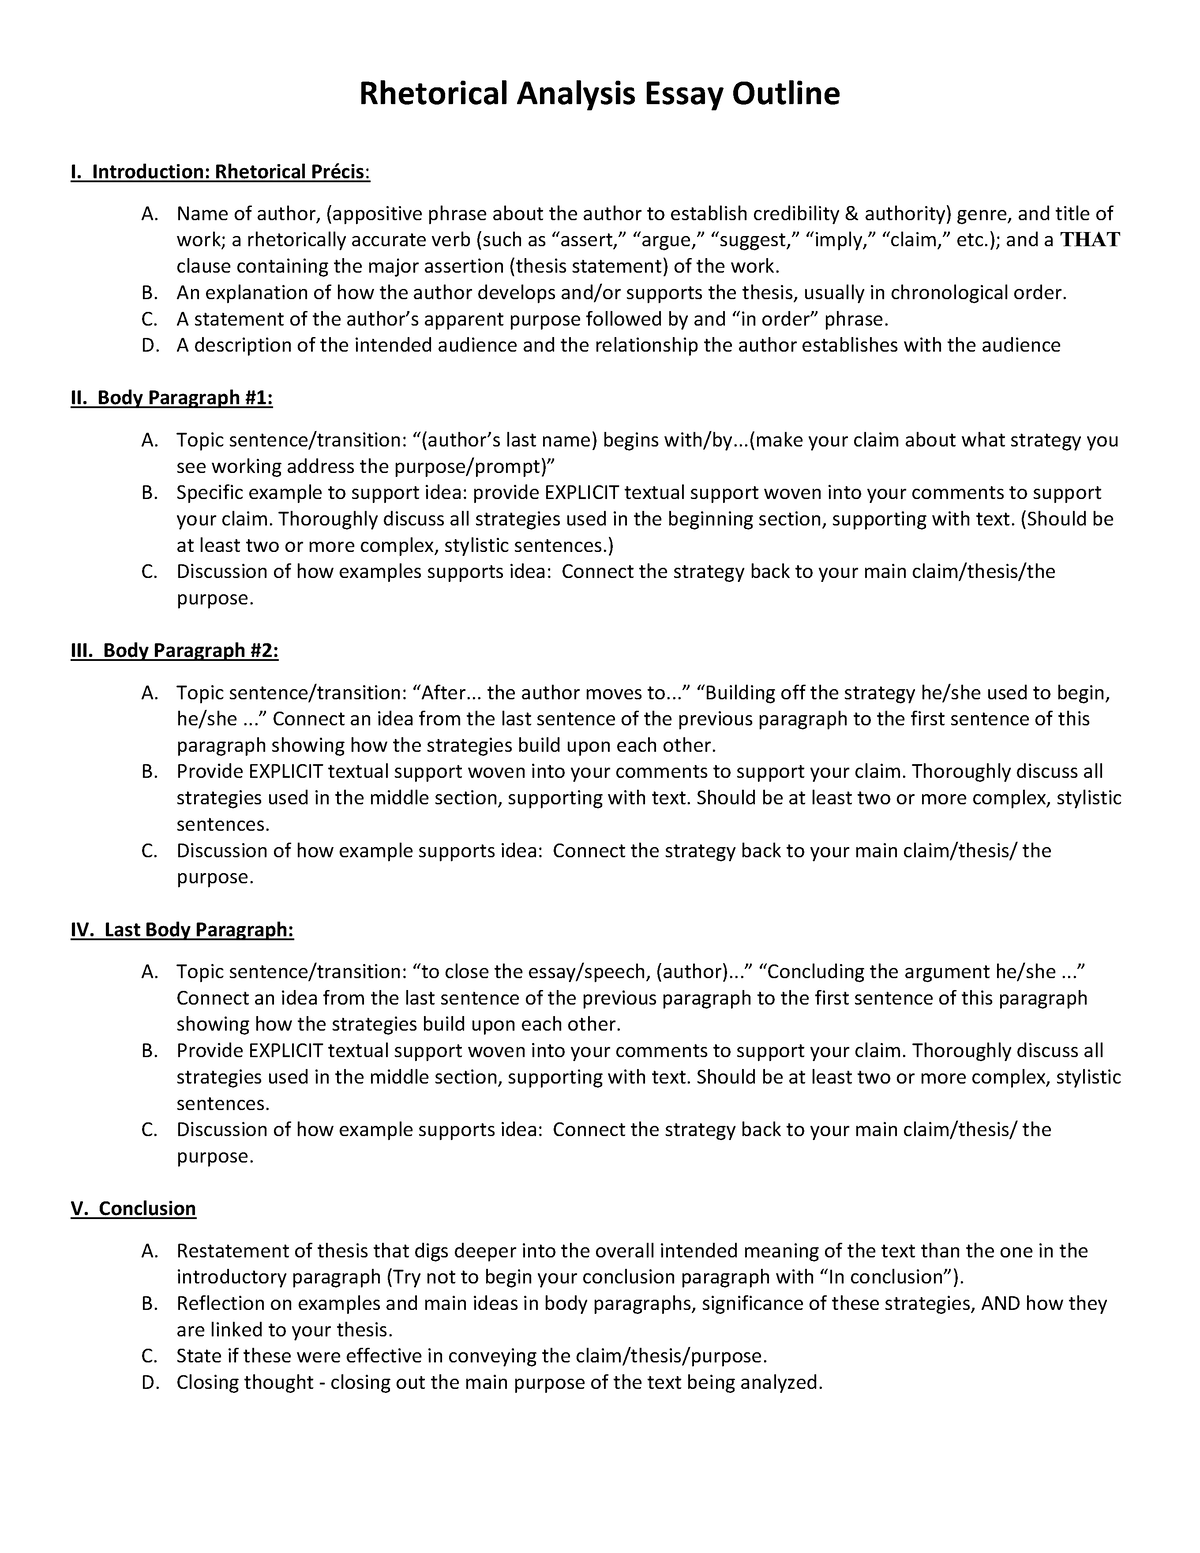 rhetorical analysis essay samples pdf